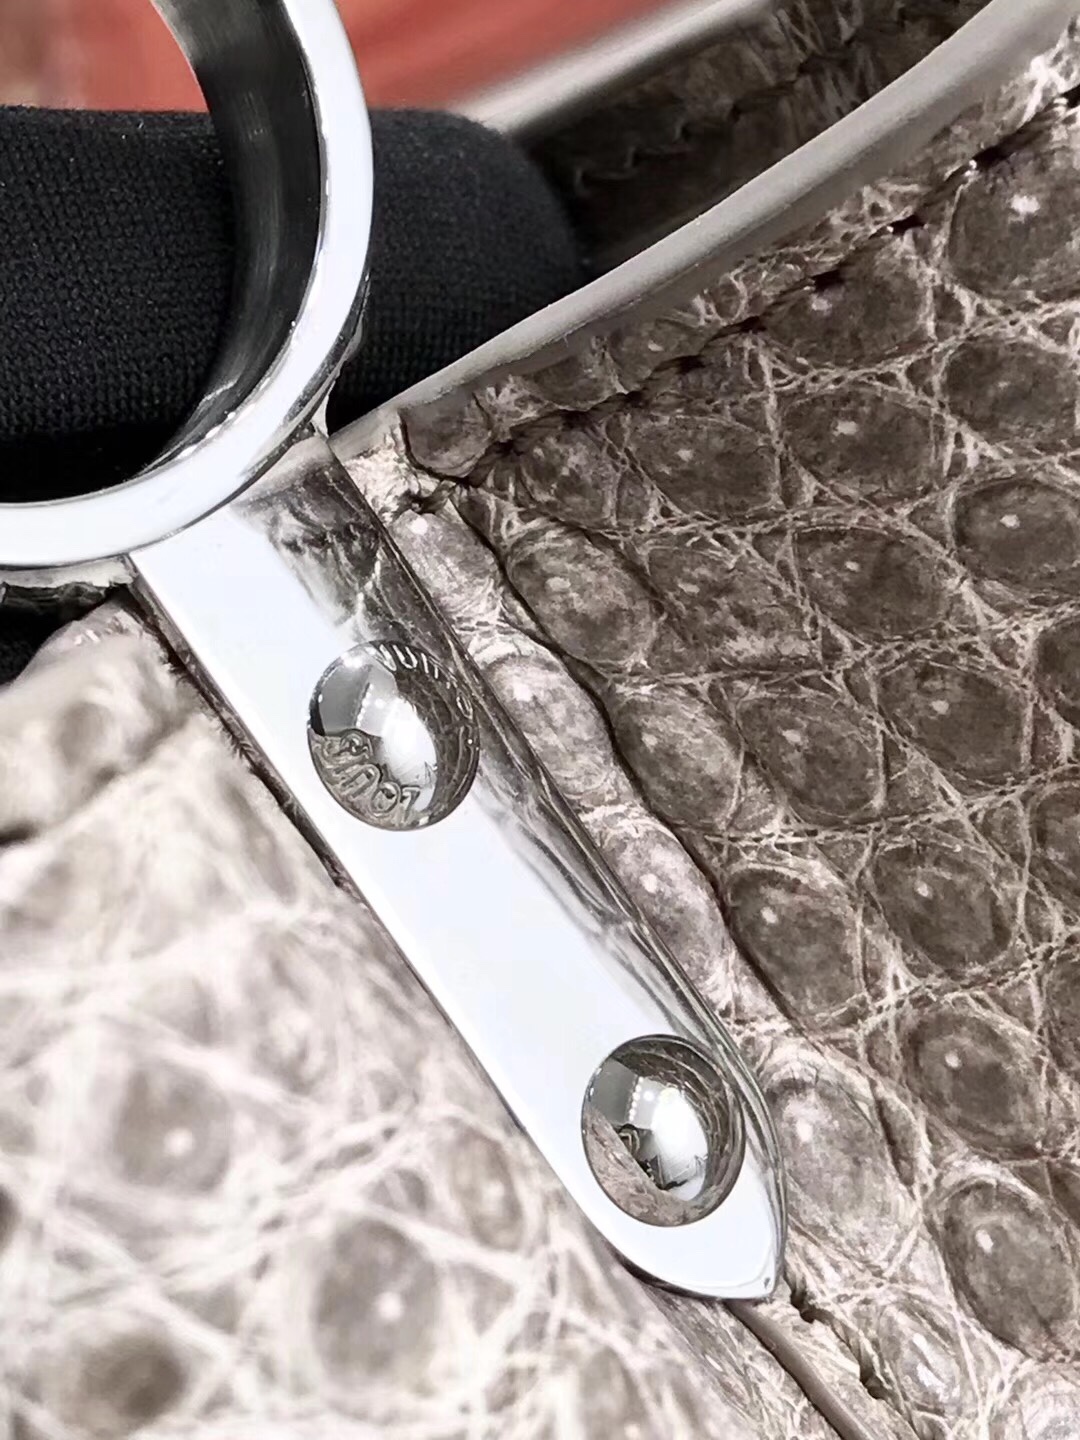 Túi xách Louis Vuitton Capucines da cá sấu siêu cấp VIP - TXLV290